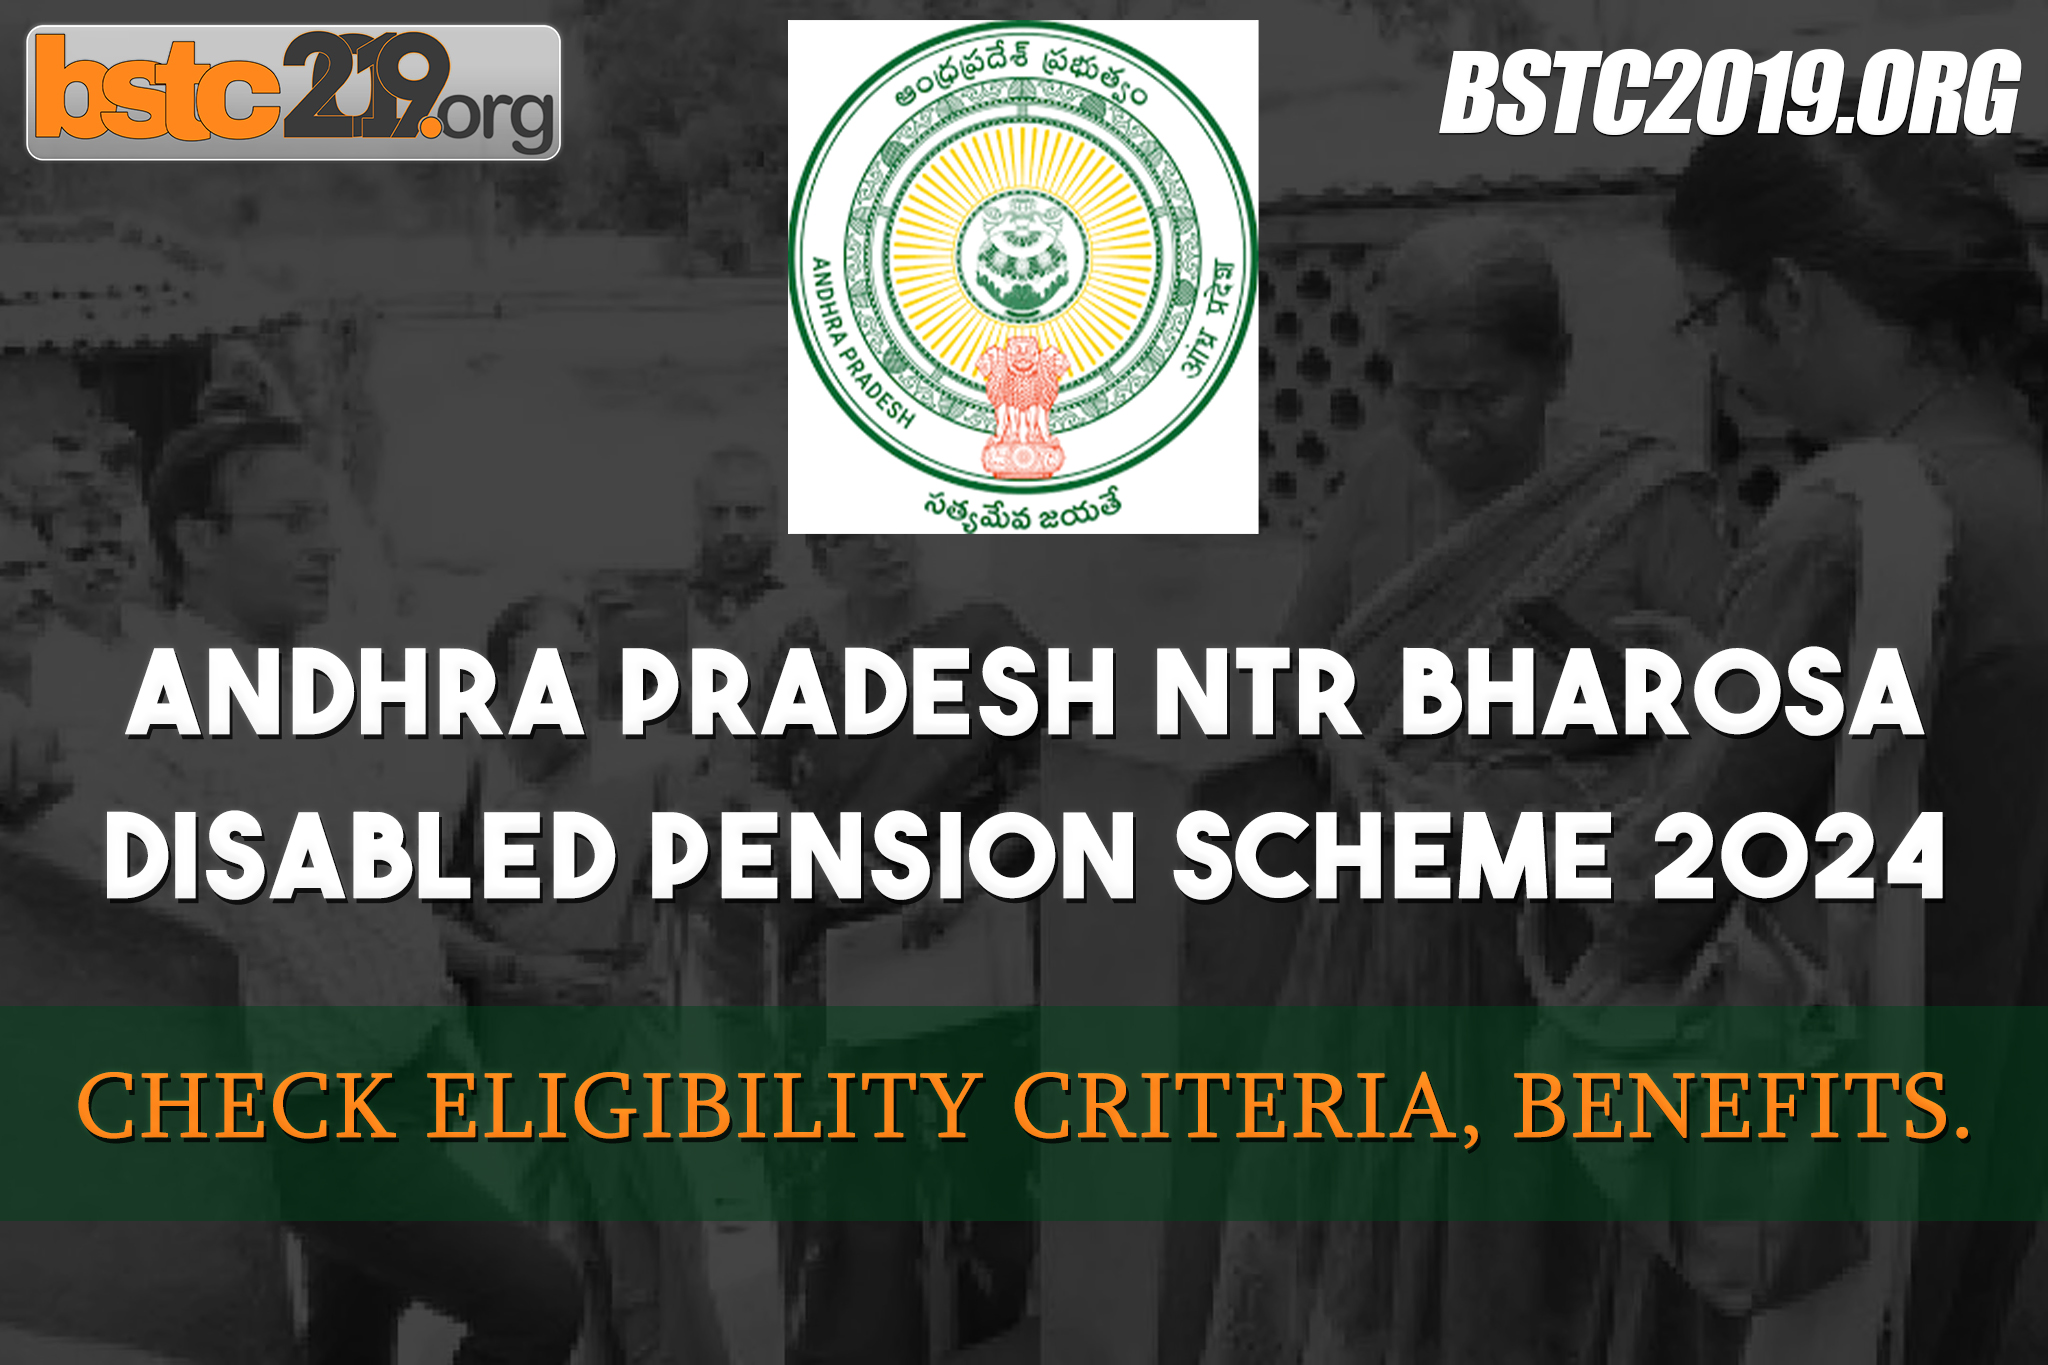 NTR Bharosa Disabled Pension